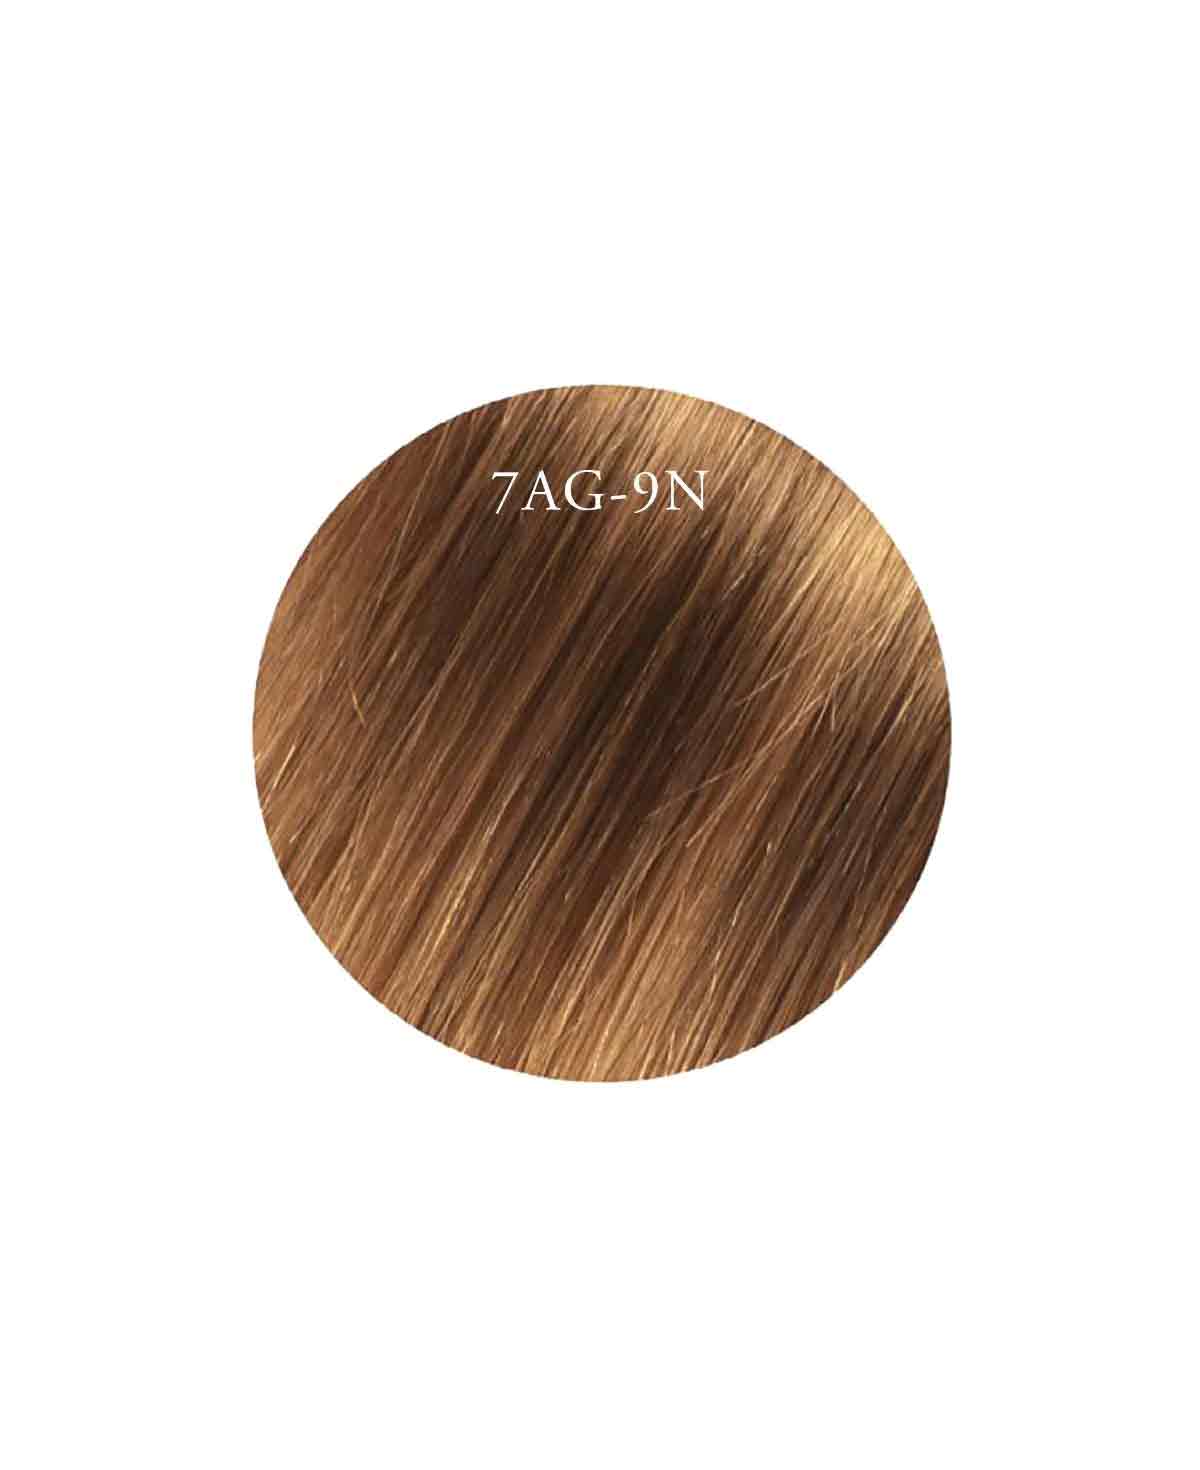 Showpony 45-50cm (20") 7 Piece Clip In Hair Extension - 7AG-9N Dark Bronde Highlight